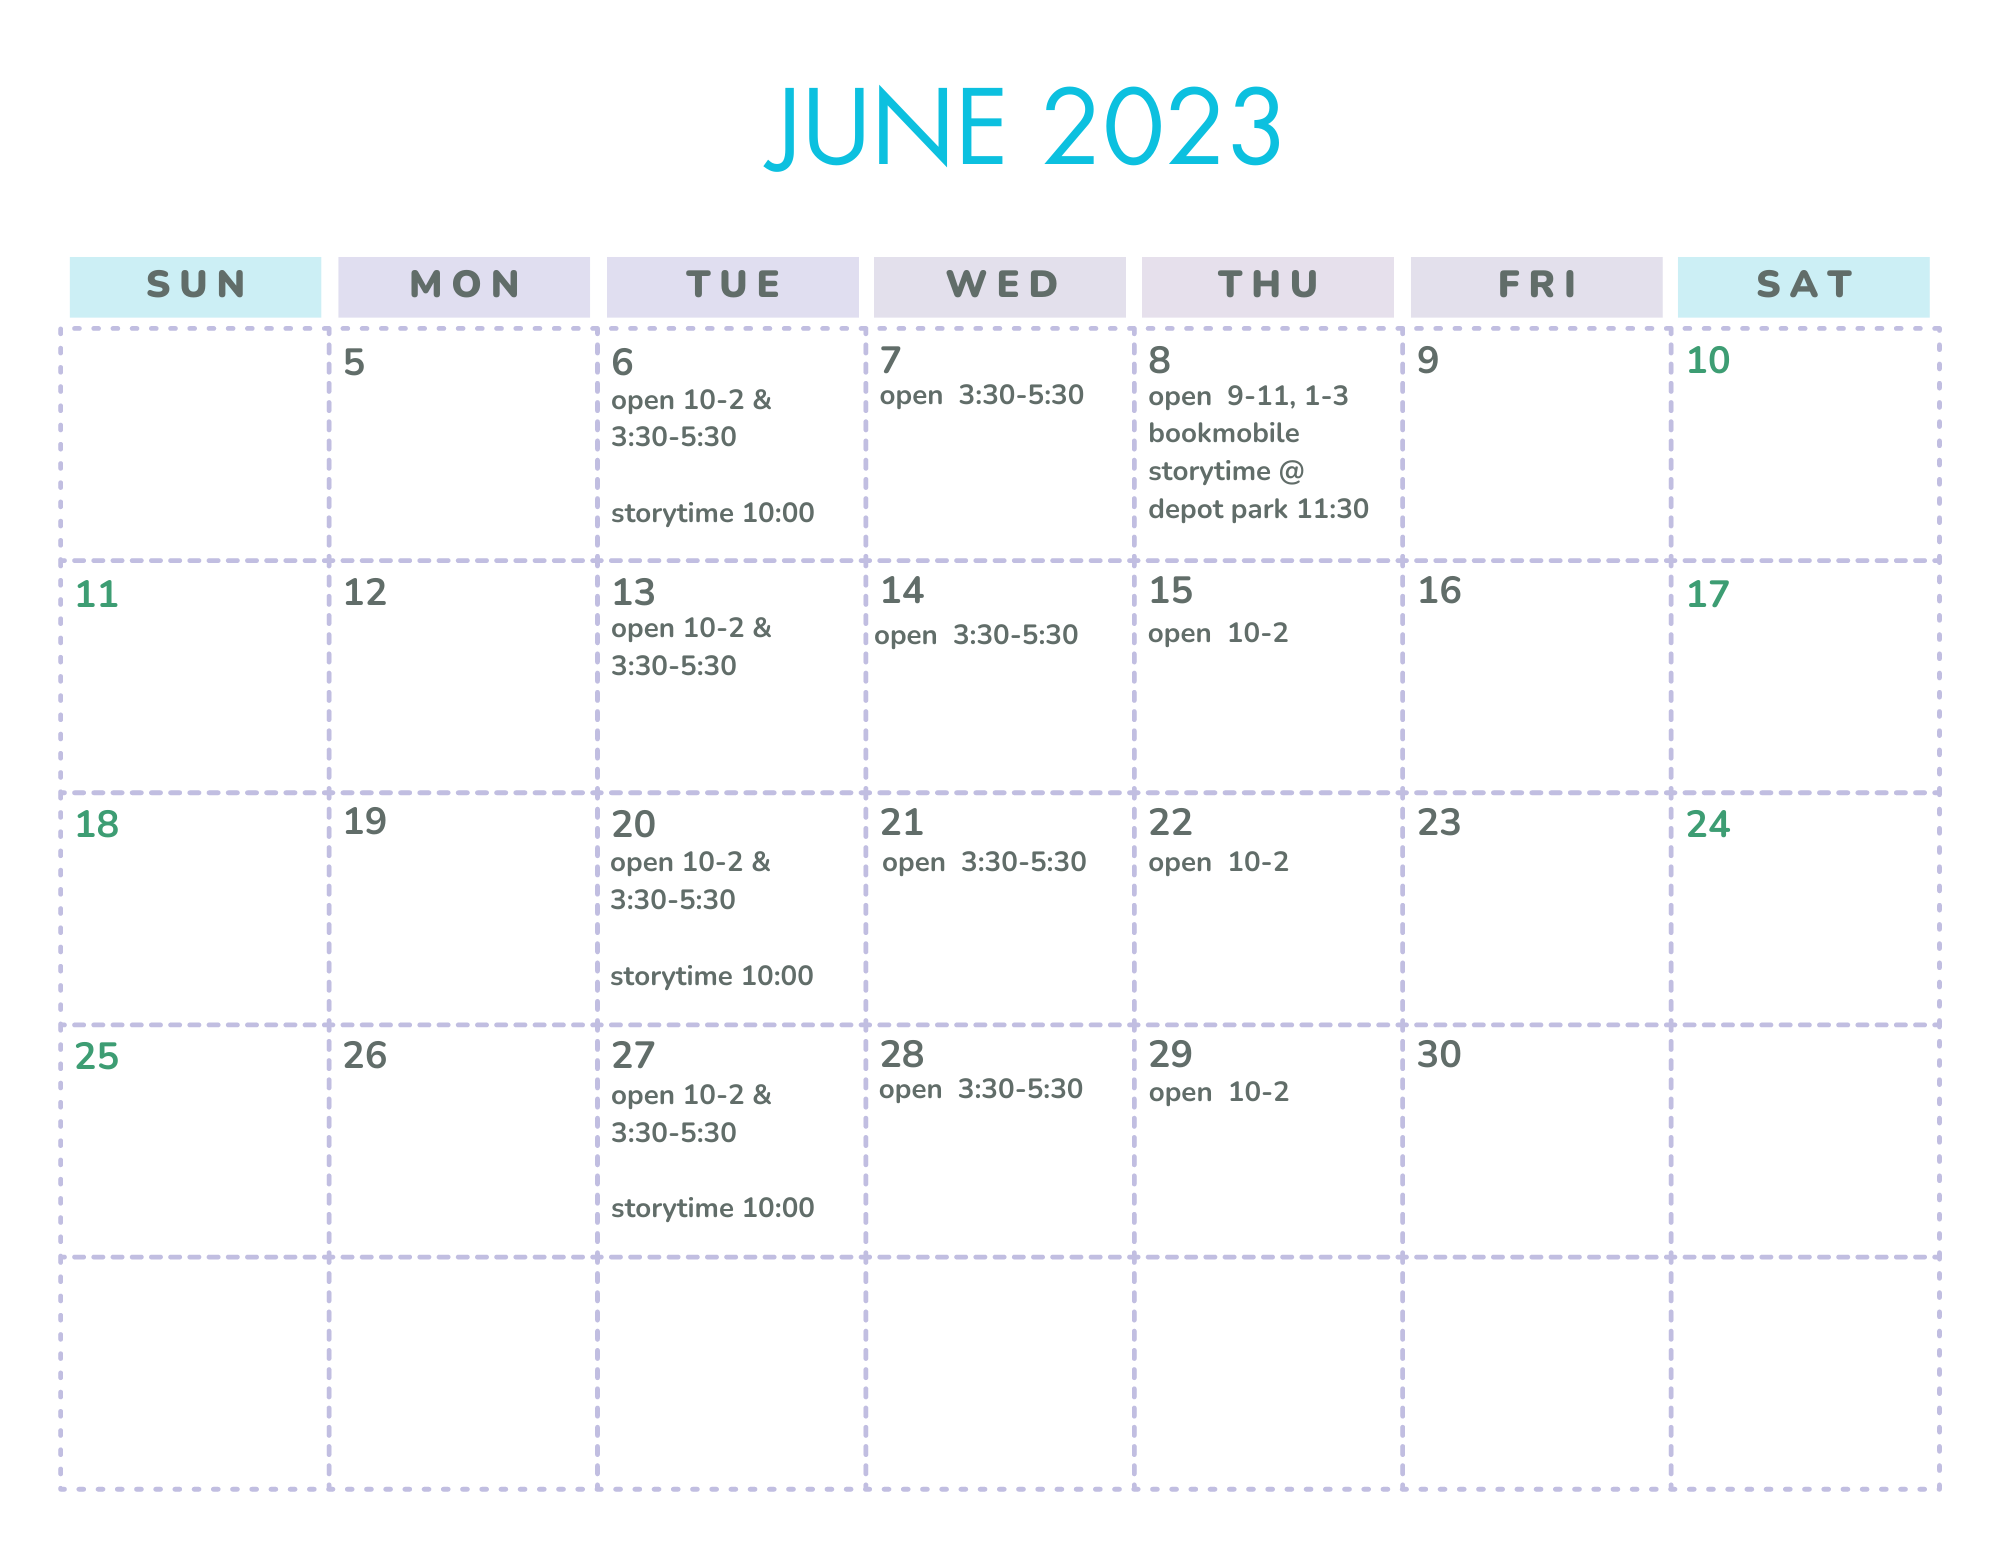 june 2023 calendar showing open library dates